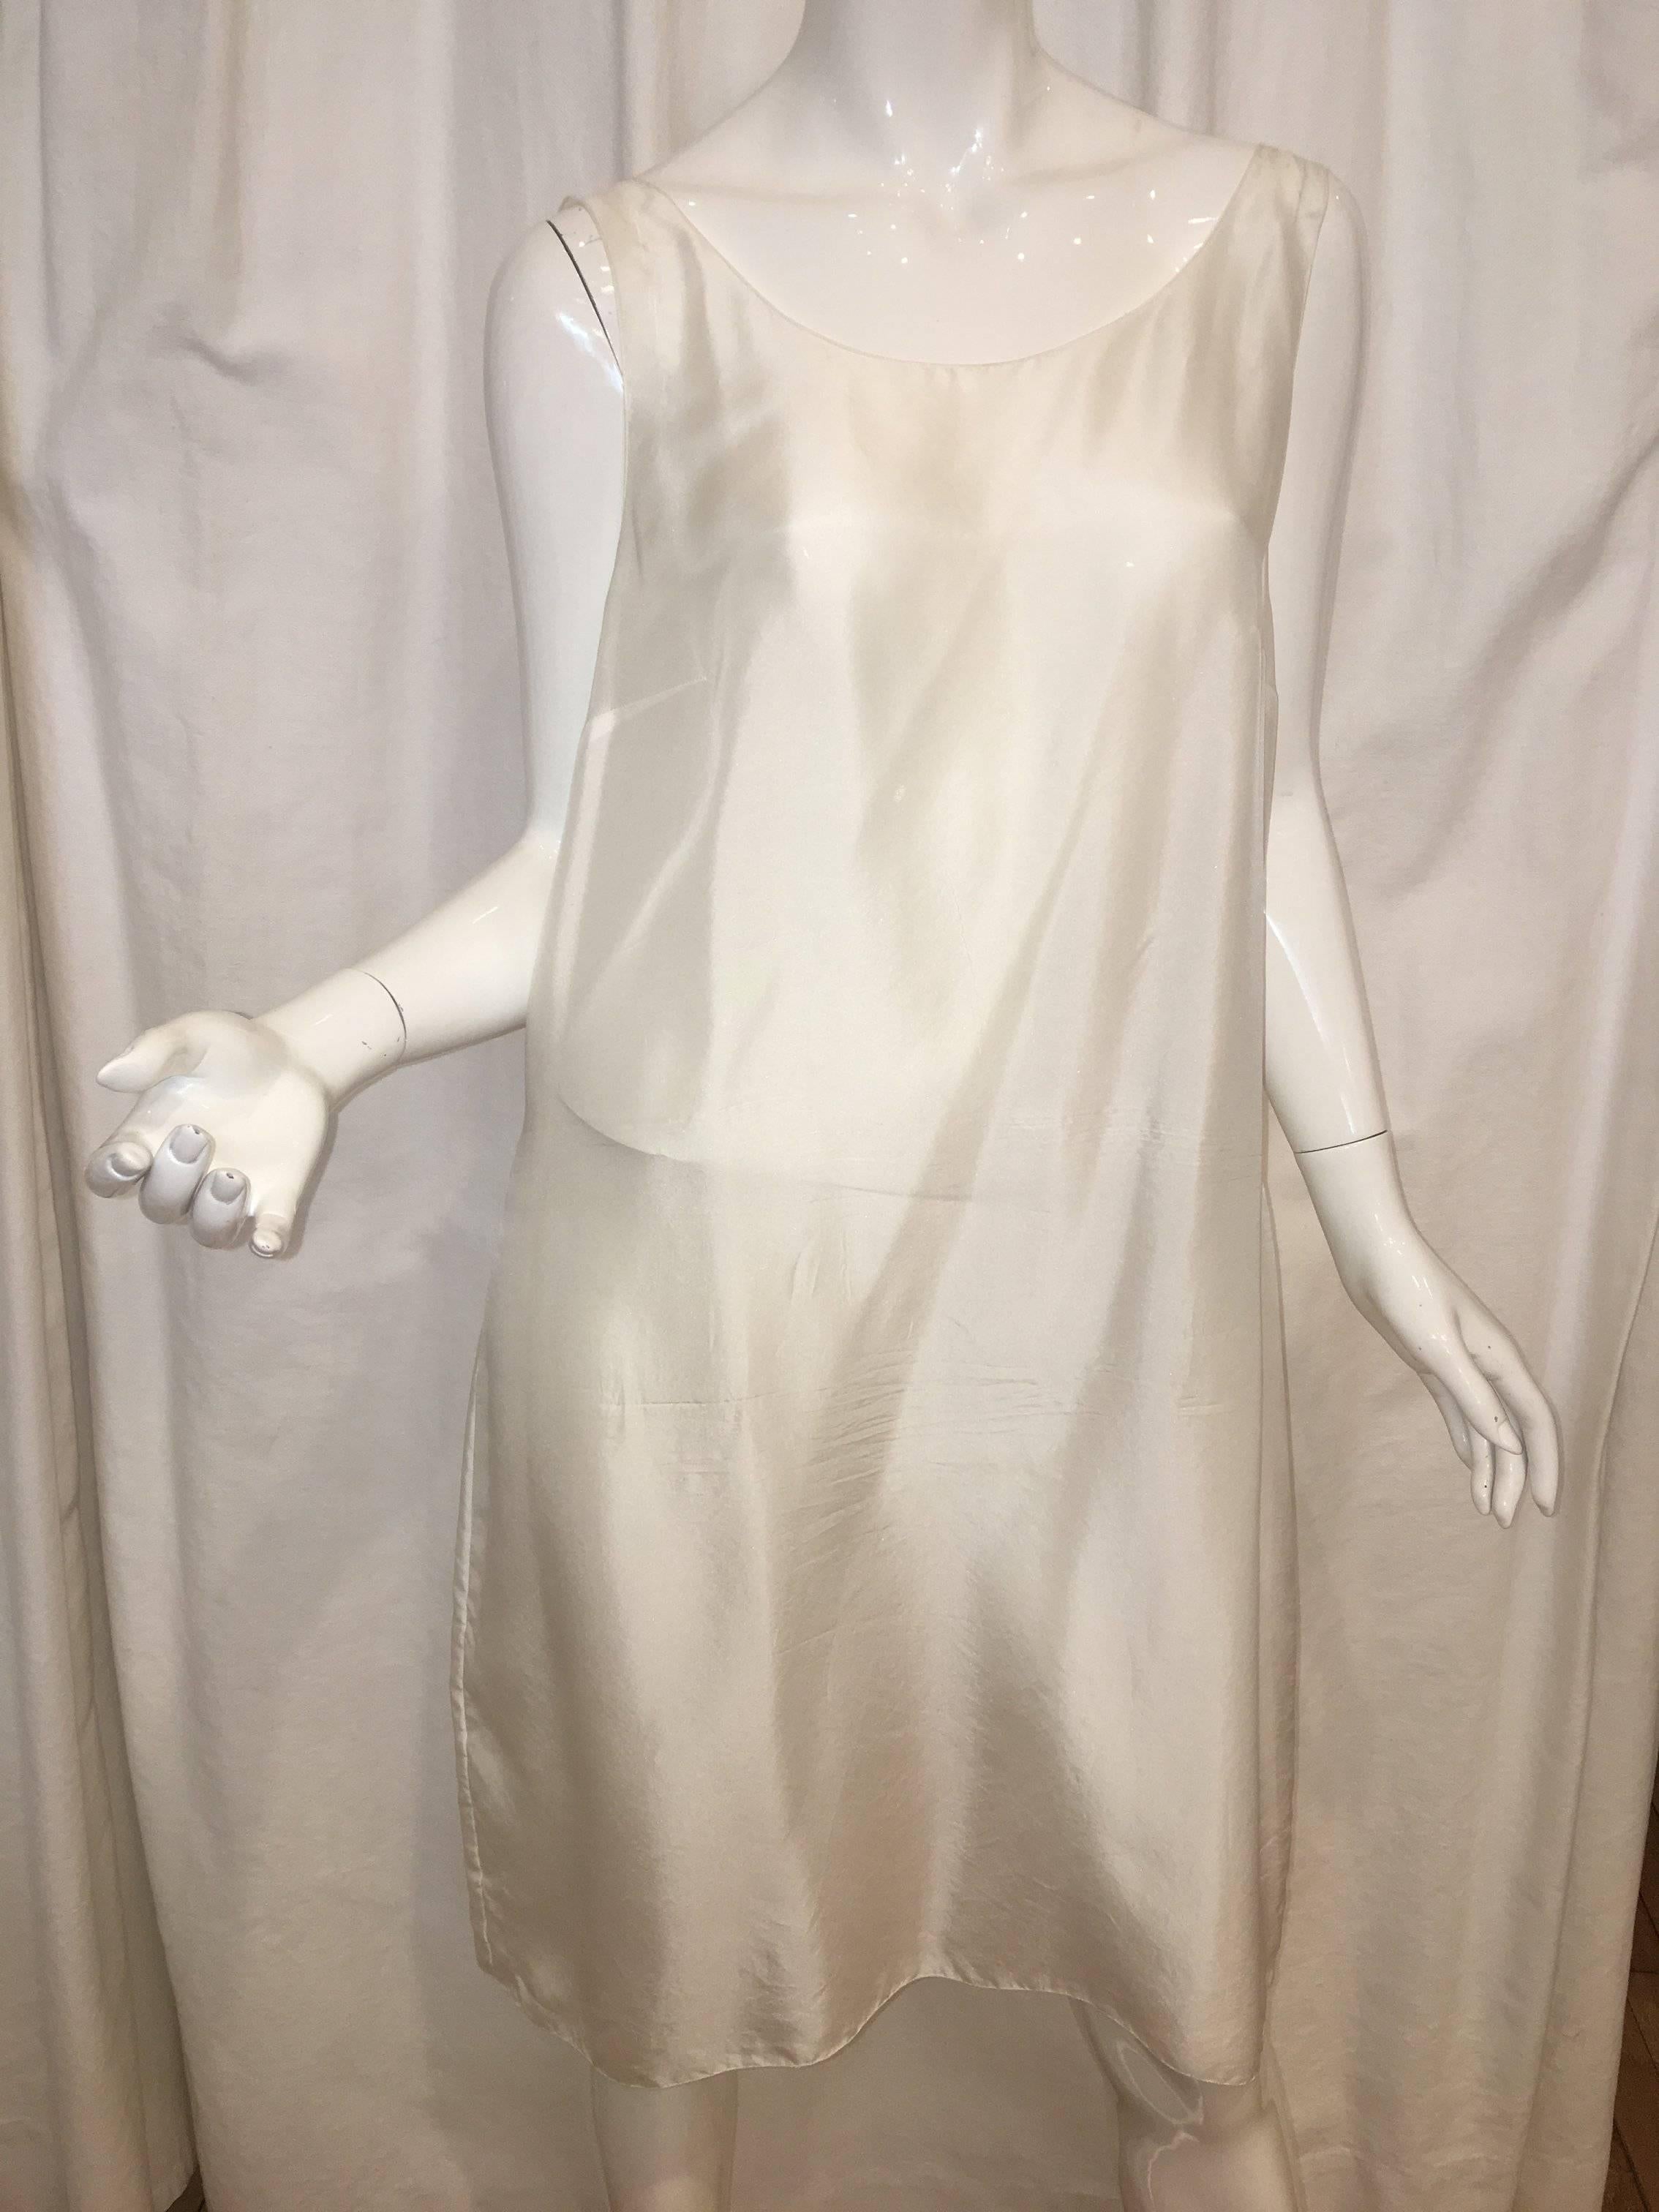 Chanel 2-Piece Dress with Slip. Sleeveless pleated dress. Ivory Silk.